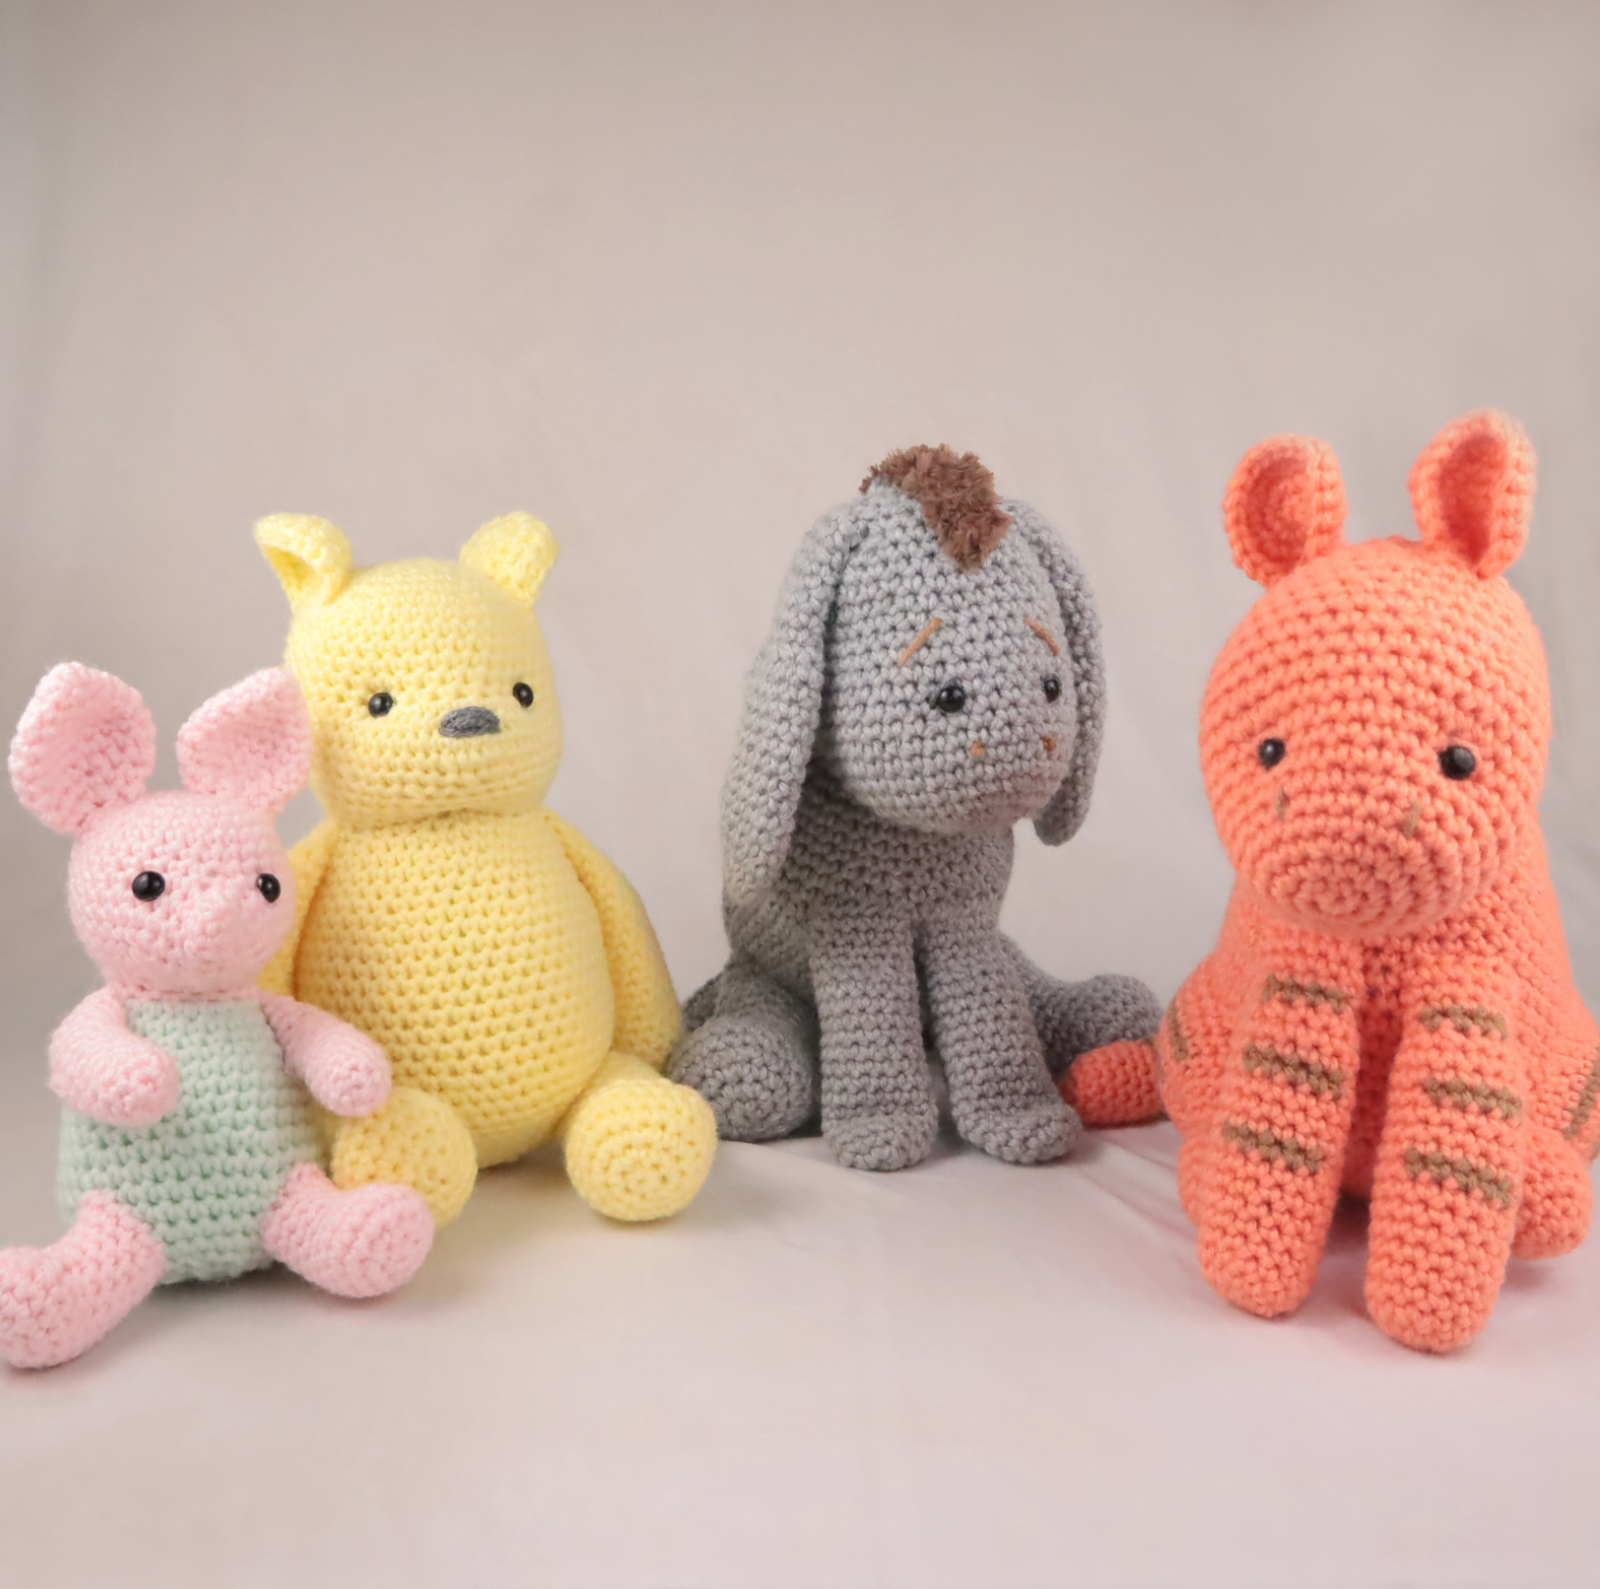 Free classic winnie the pooh set amigurumi crochet pattern bundle